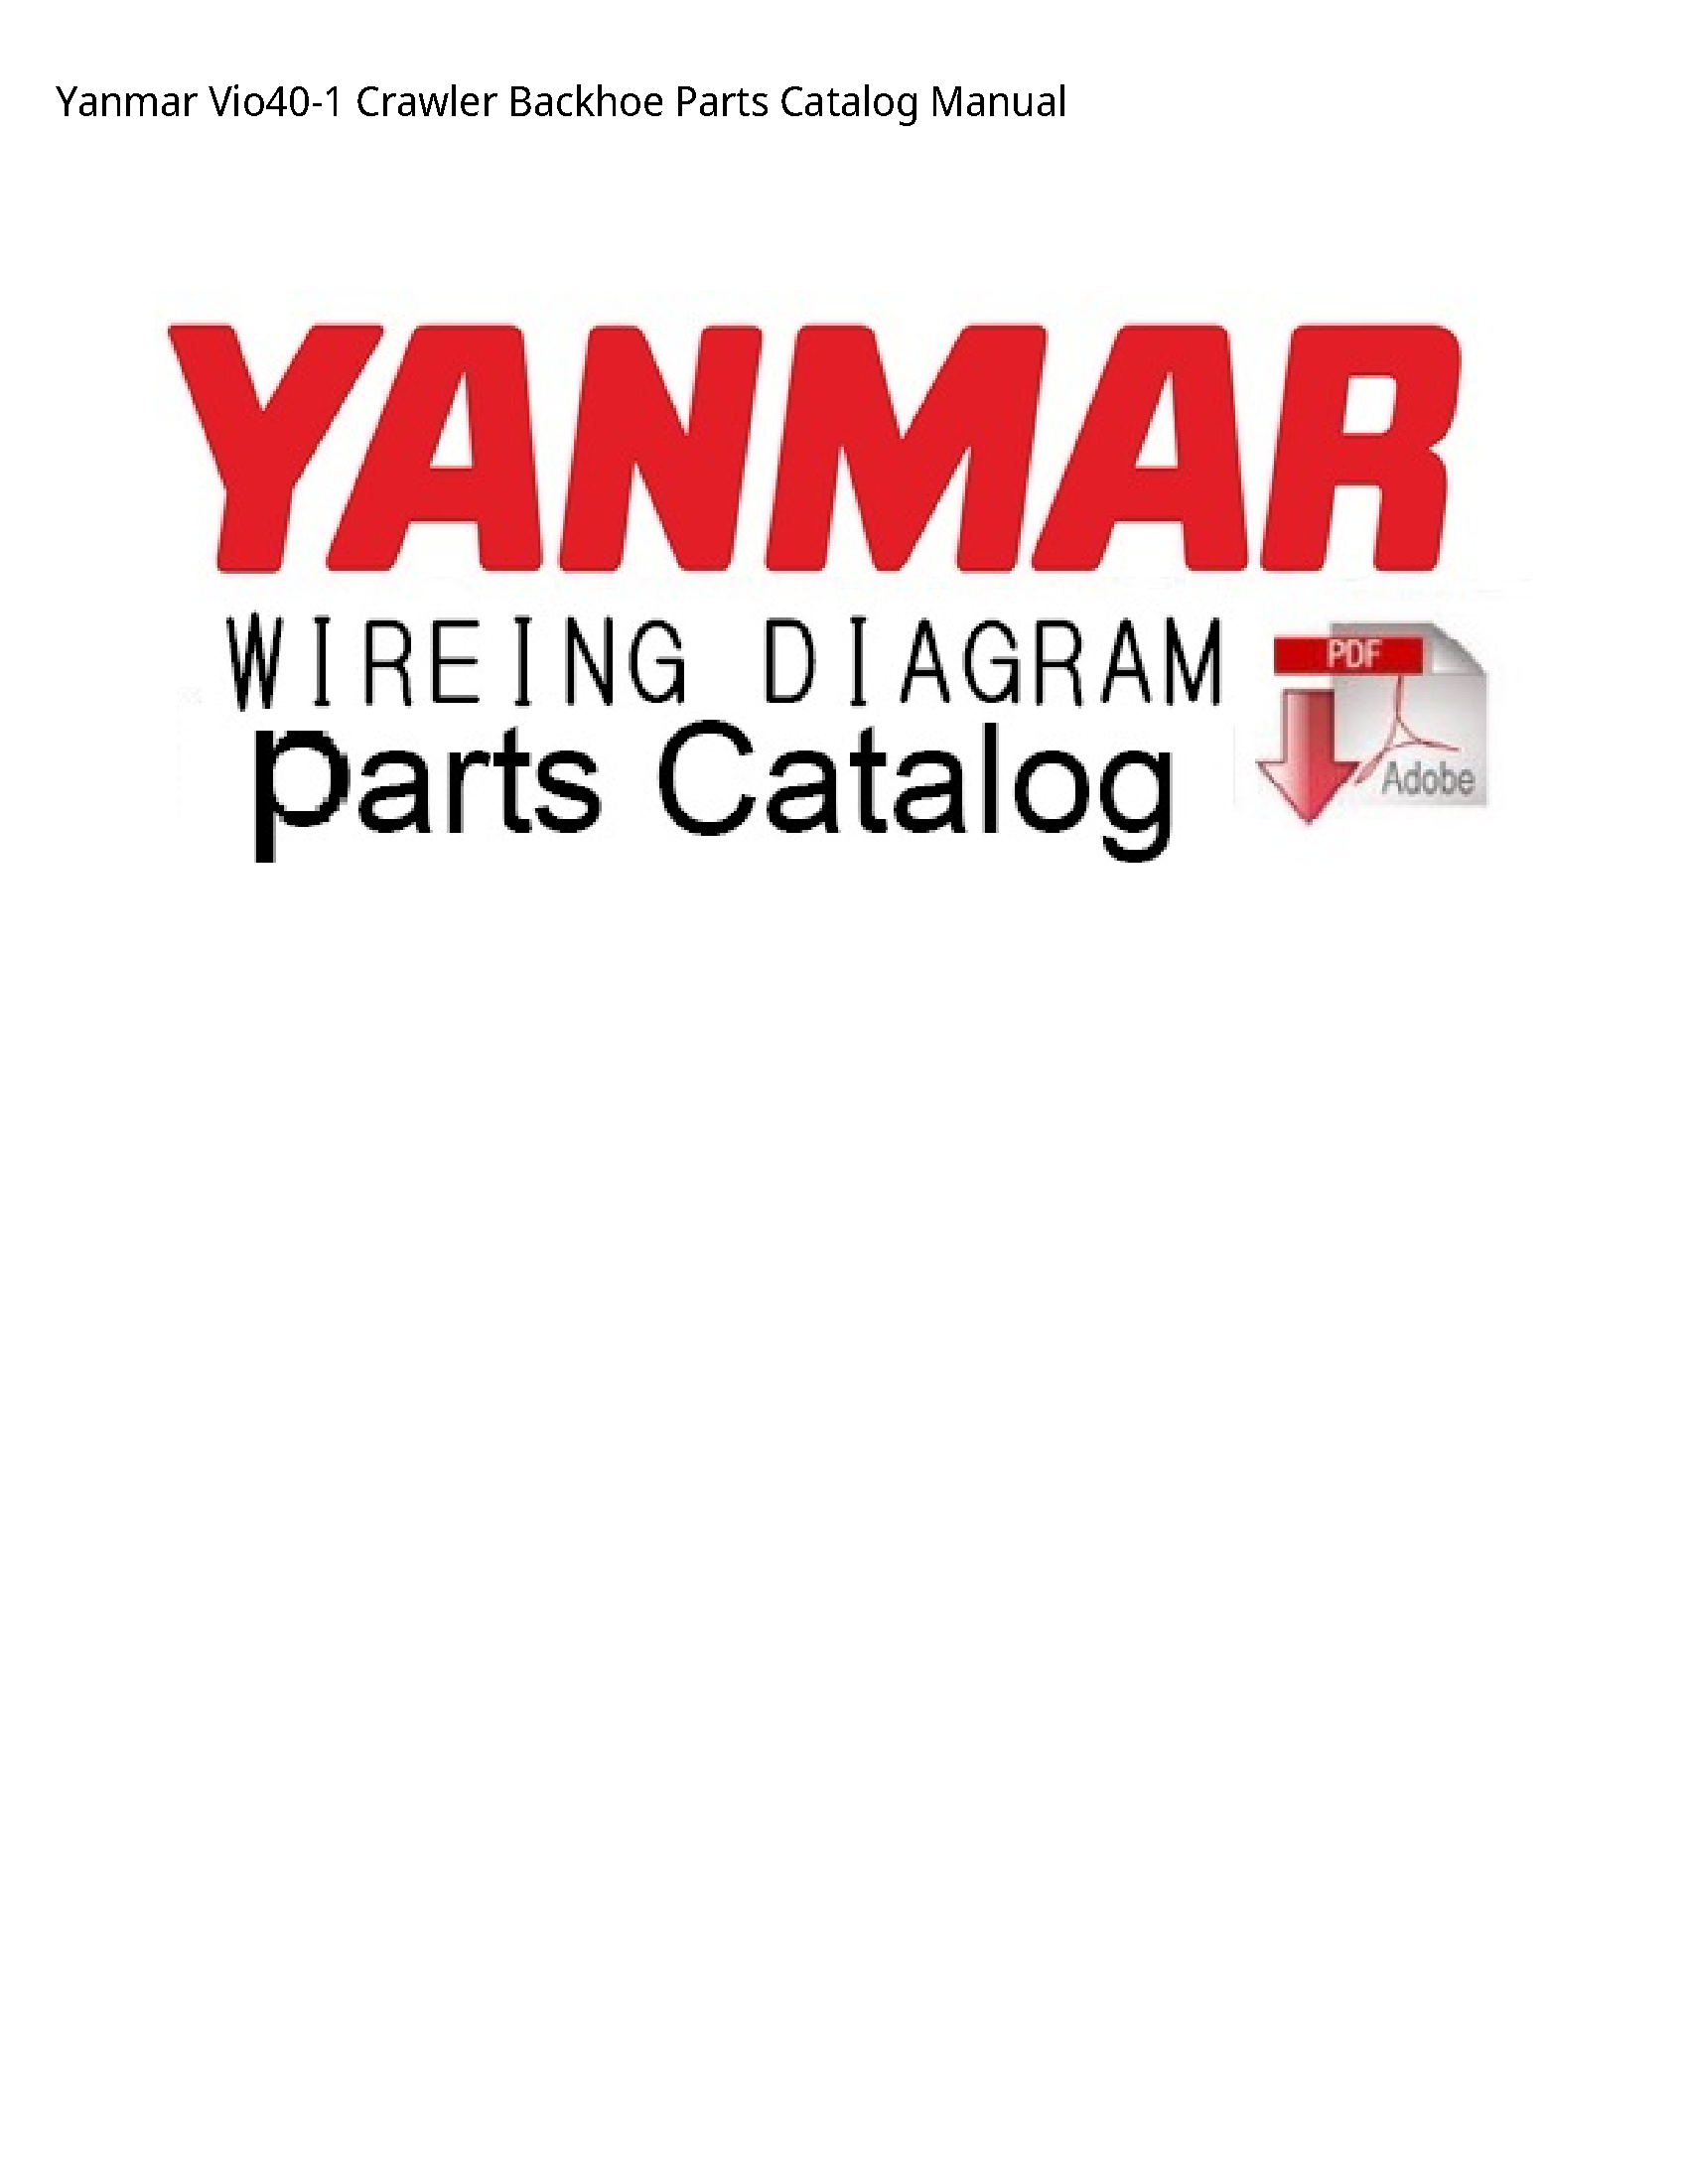 Yanmar Vio40-1 Crawler Backhoe Parts Catalog manual